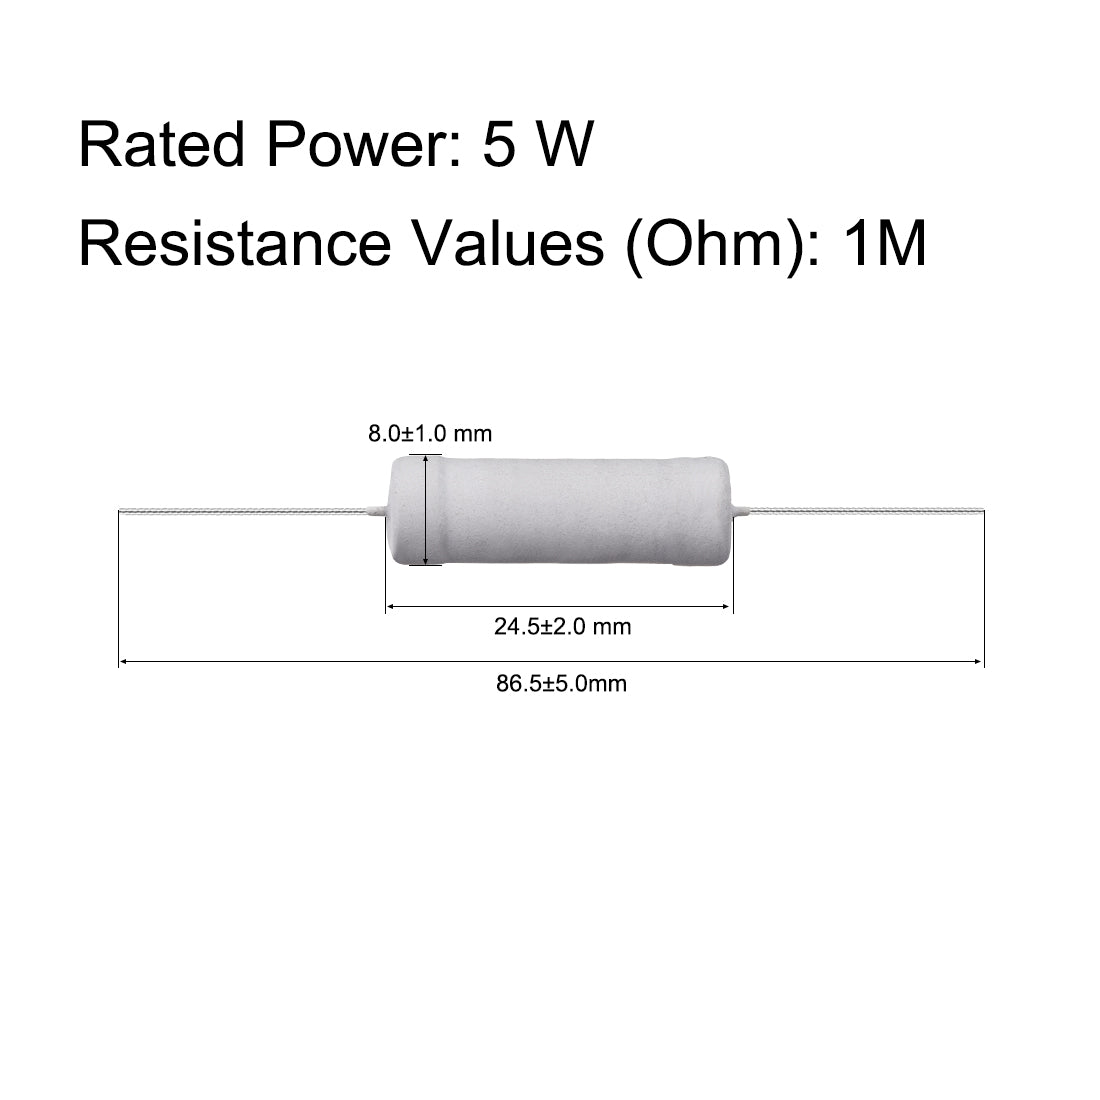 uxcell Uxcell 30 Pcs 5W 5 Watt Metal Oxide Film Resistor Axile Lead 1M Ohm ±5% Tolerance